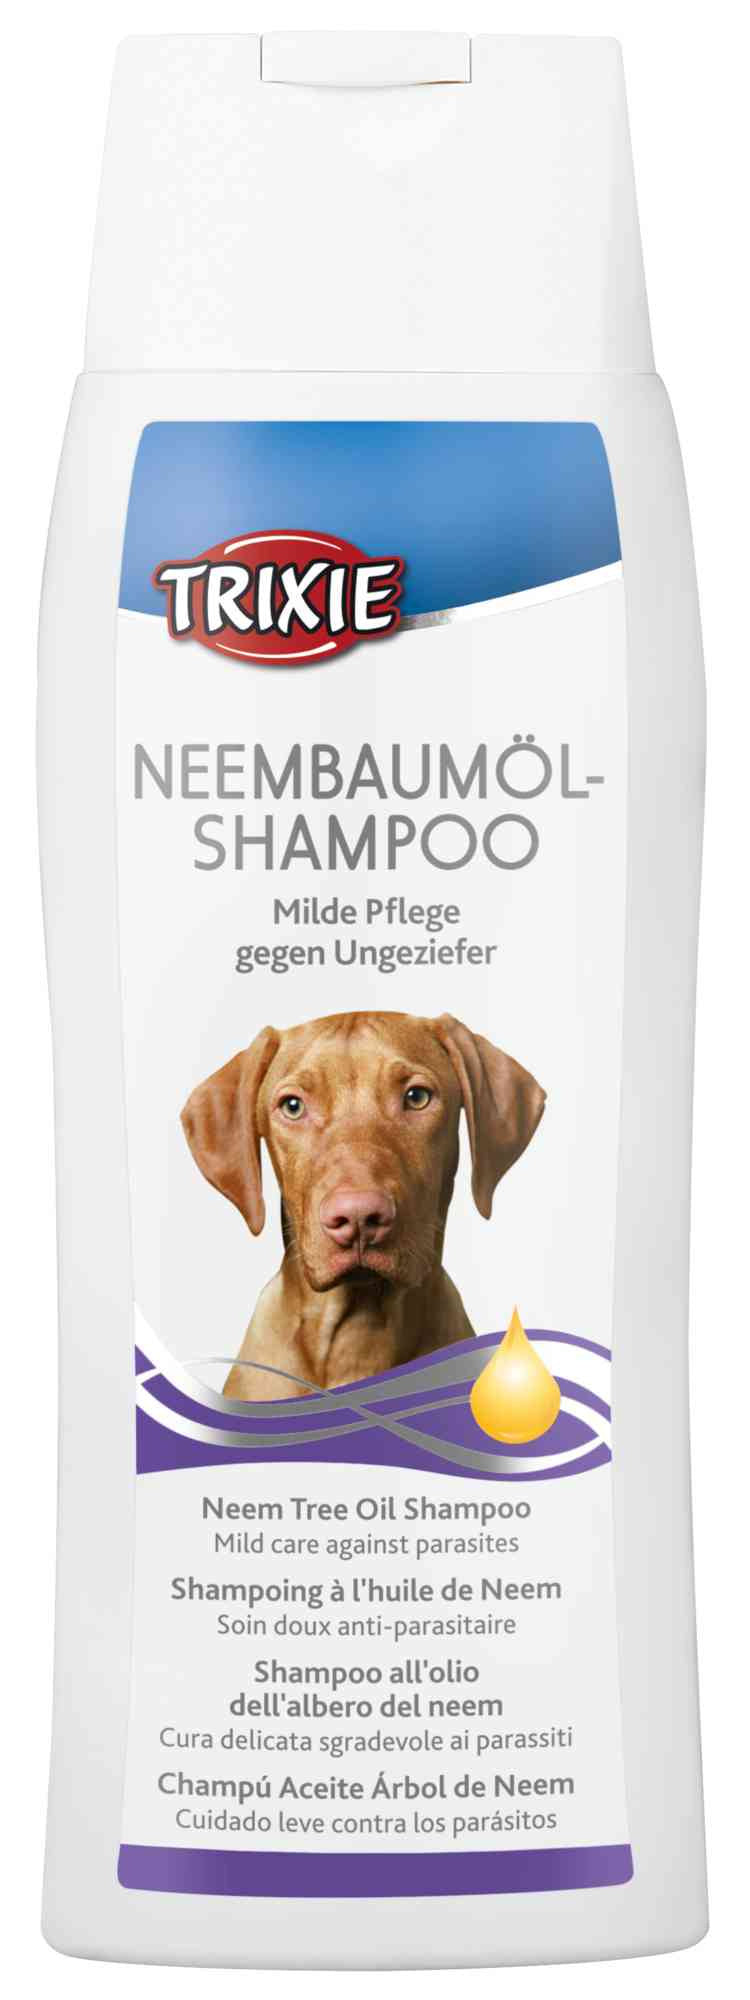 Neem Tree Oil Shampoo